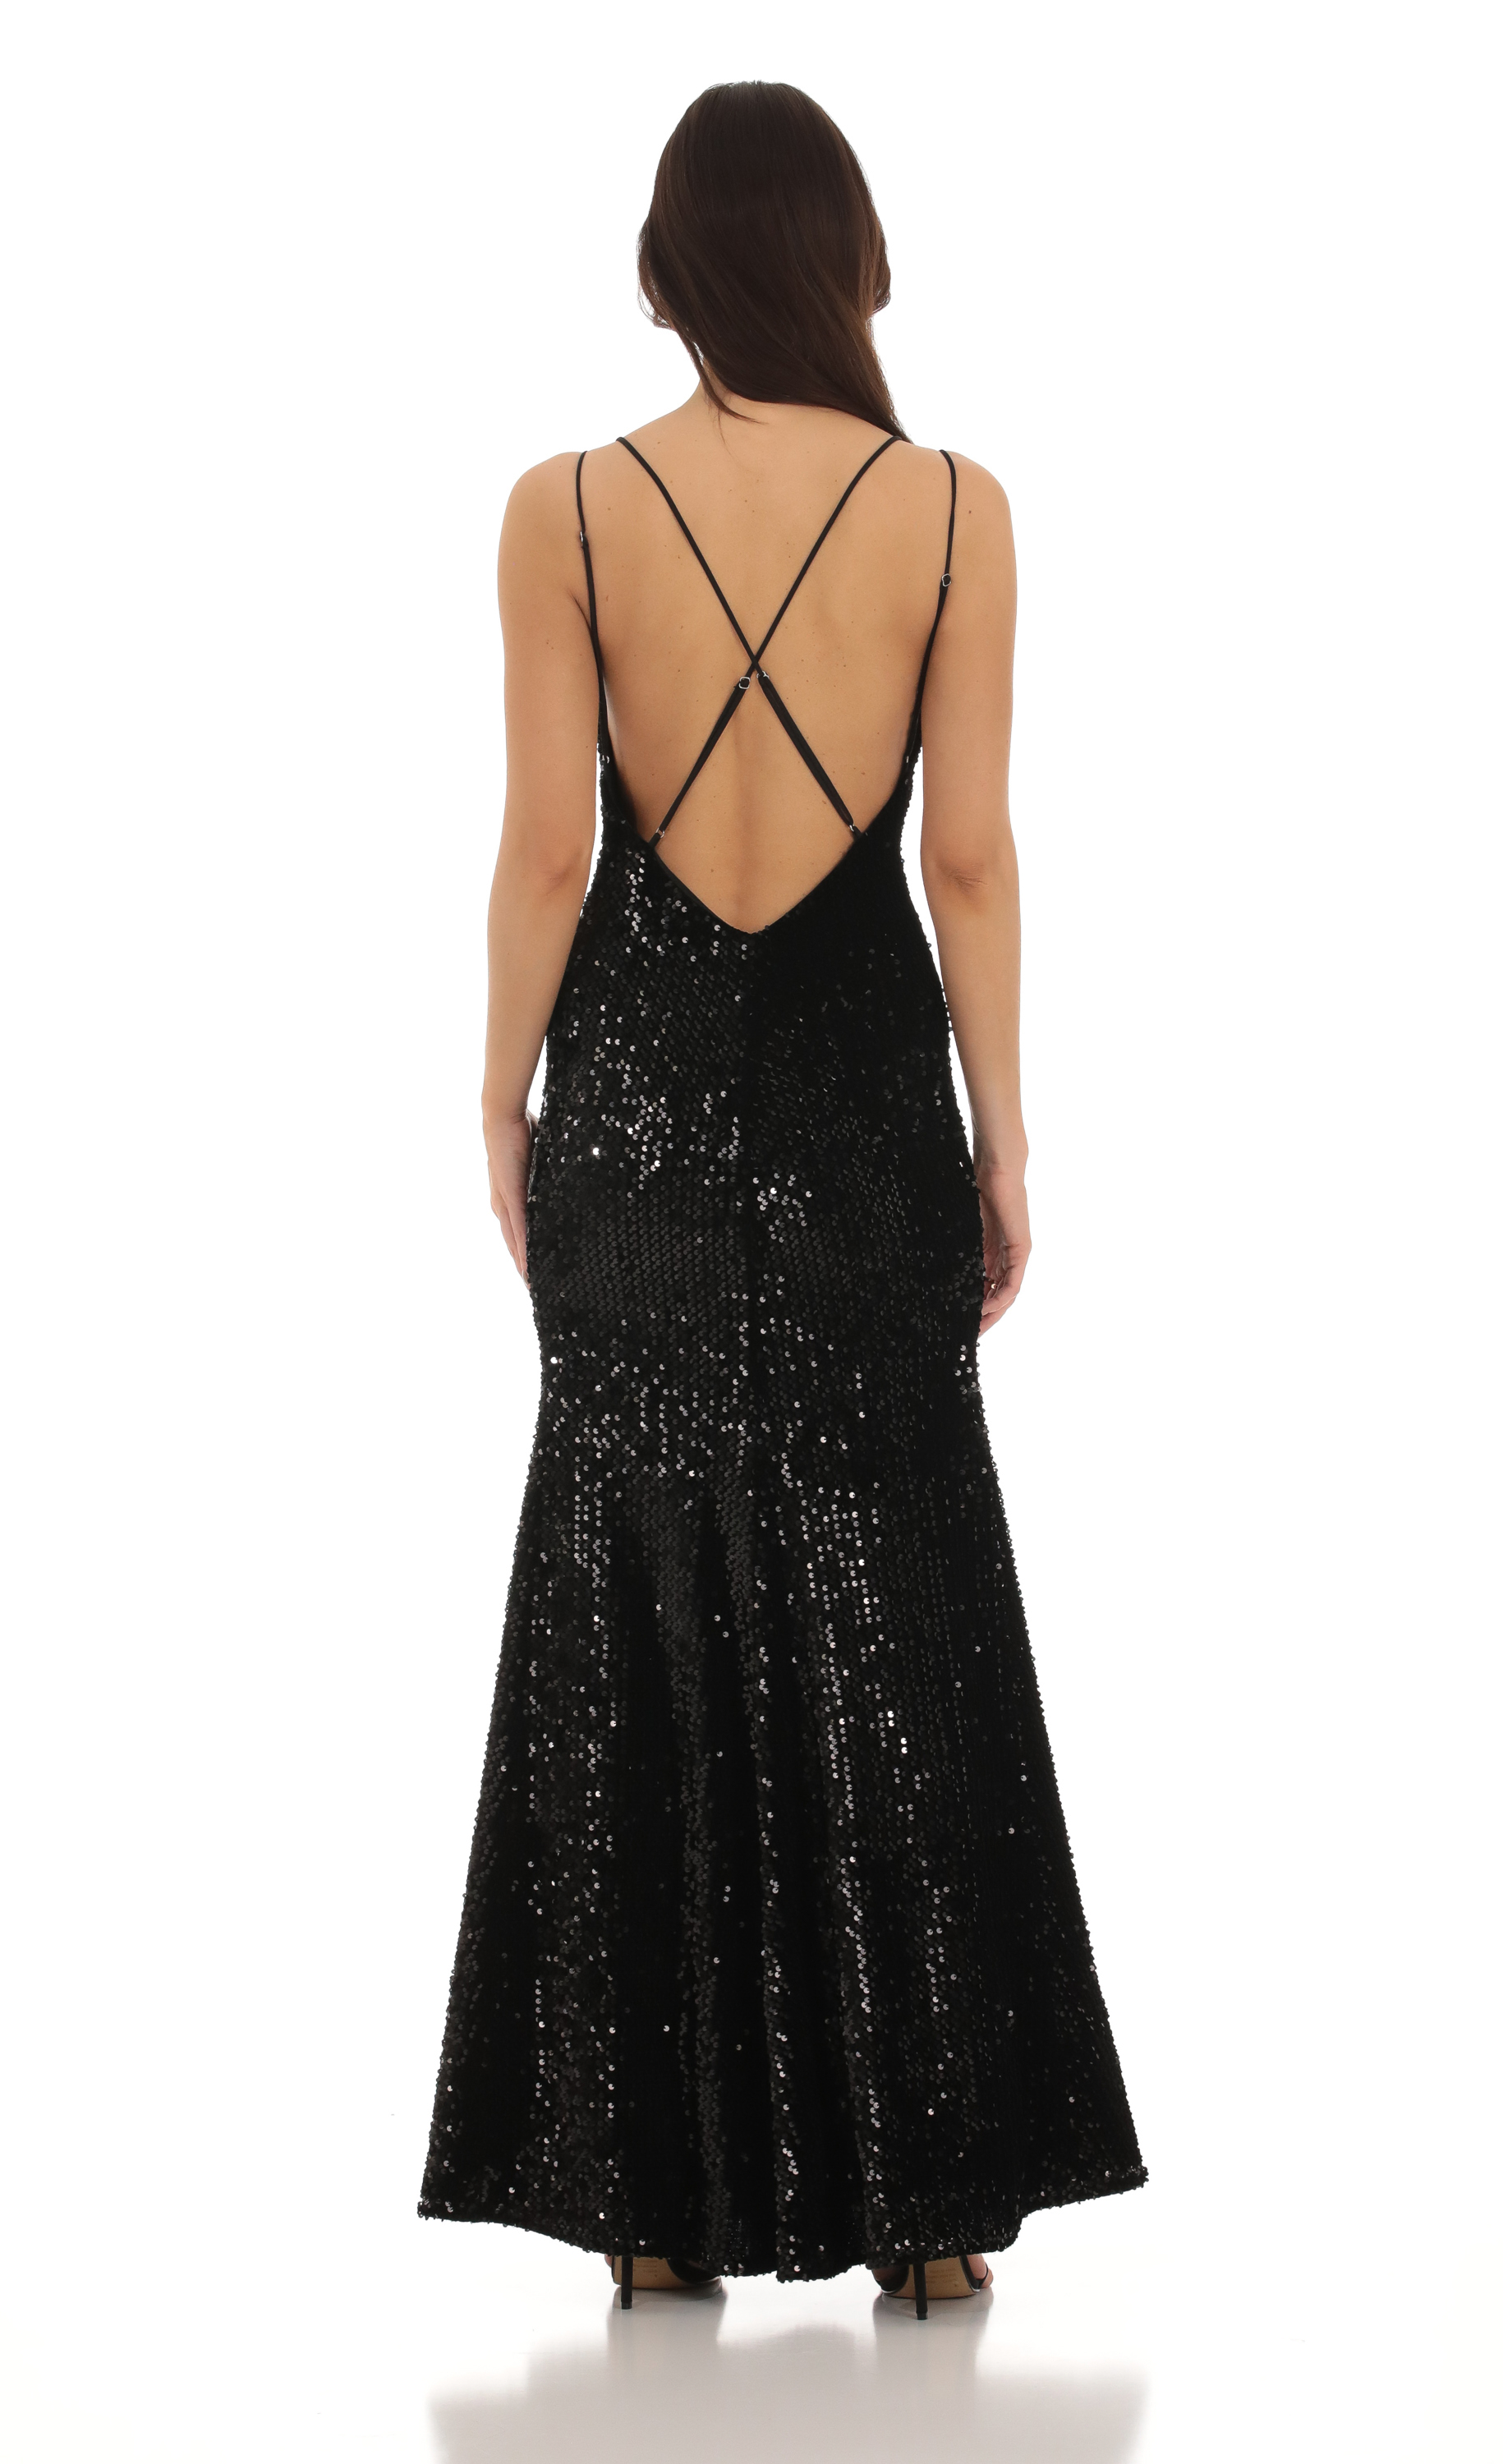 Brylee Velvet Sequin Dress in Black